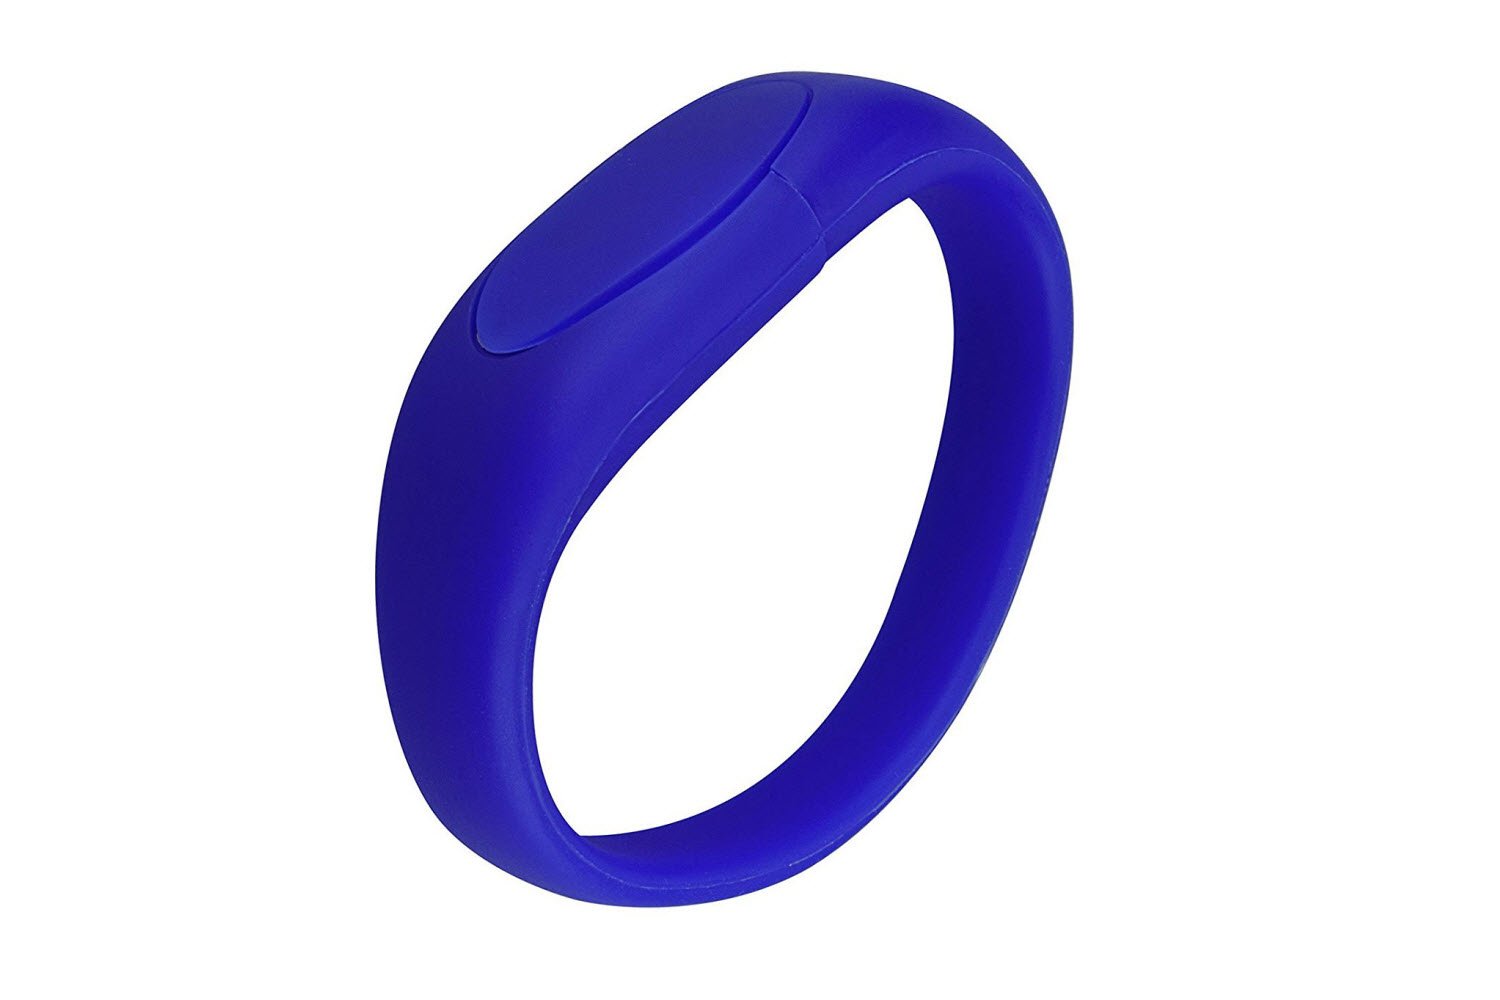 KOOTION 32GB Wristband USB 2.0 Flash Drive - Blue